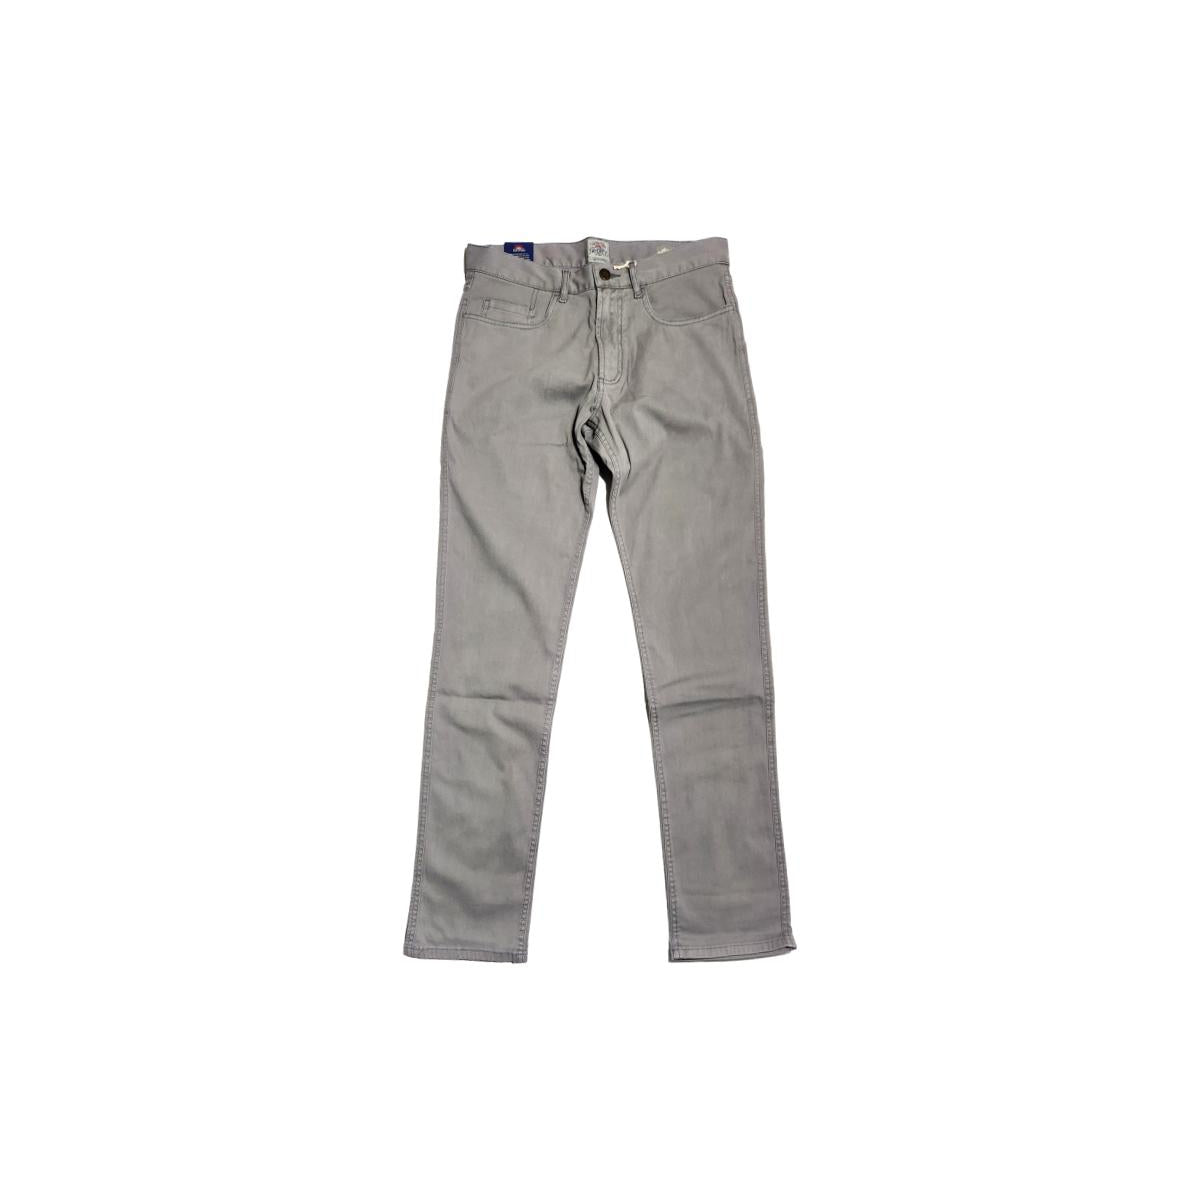 Comfort Twill Jean Rugged Grey - Pants